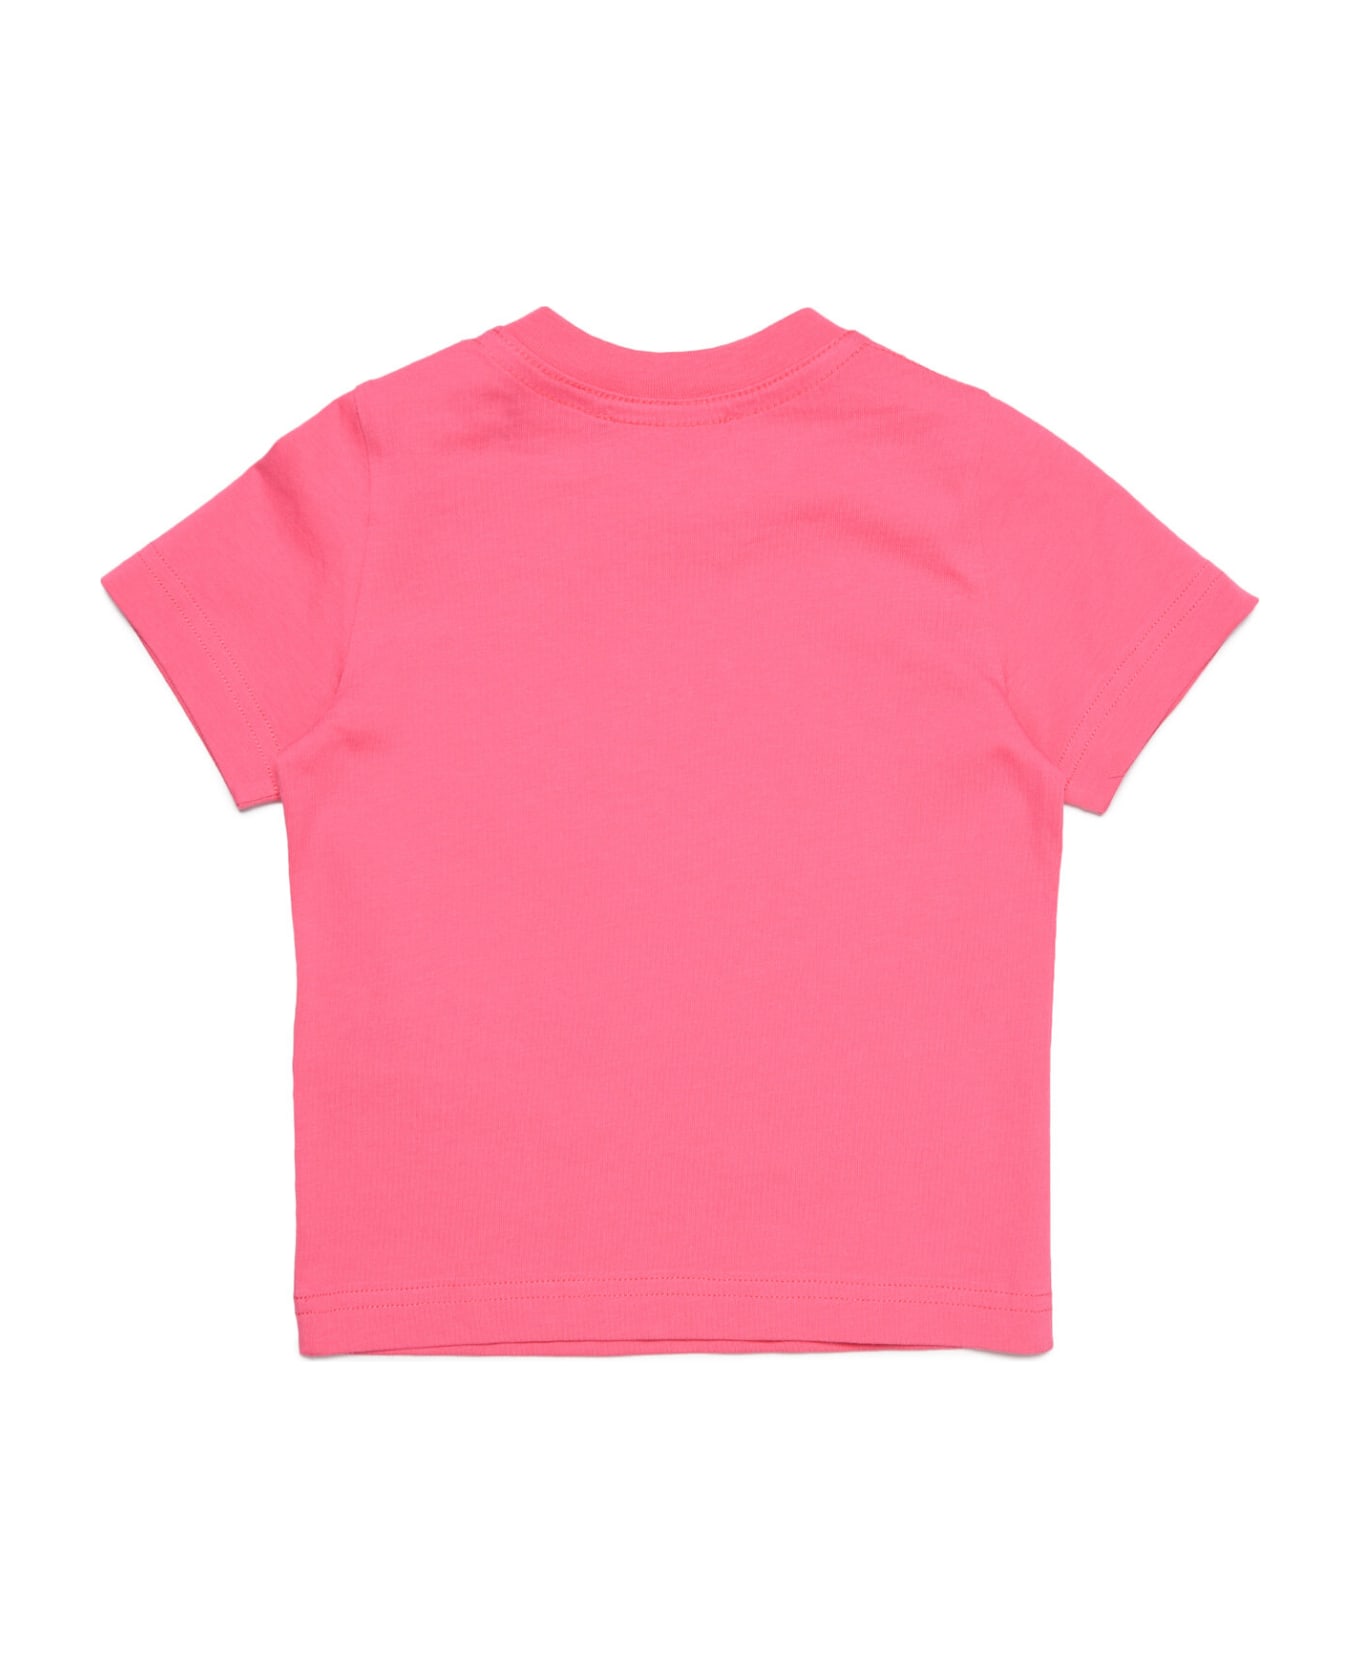 Dsquared2 D2t858b T-shirt Dsquared - Hot pink